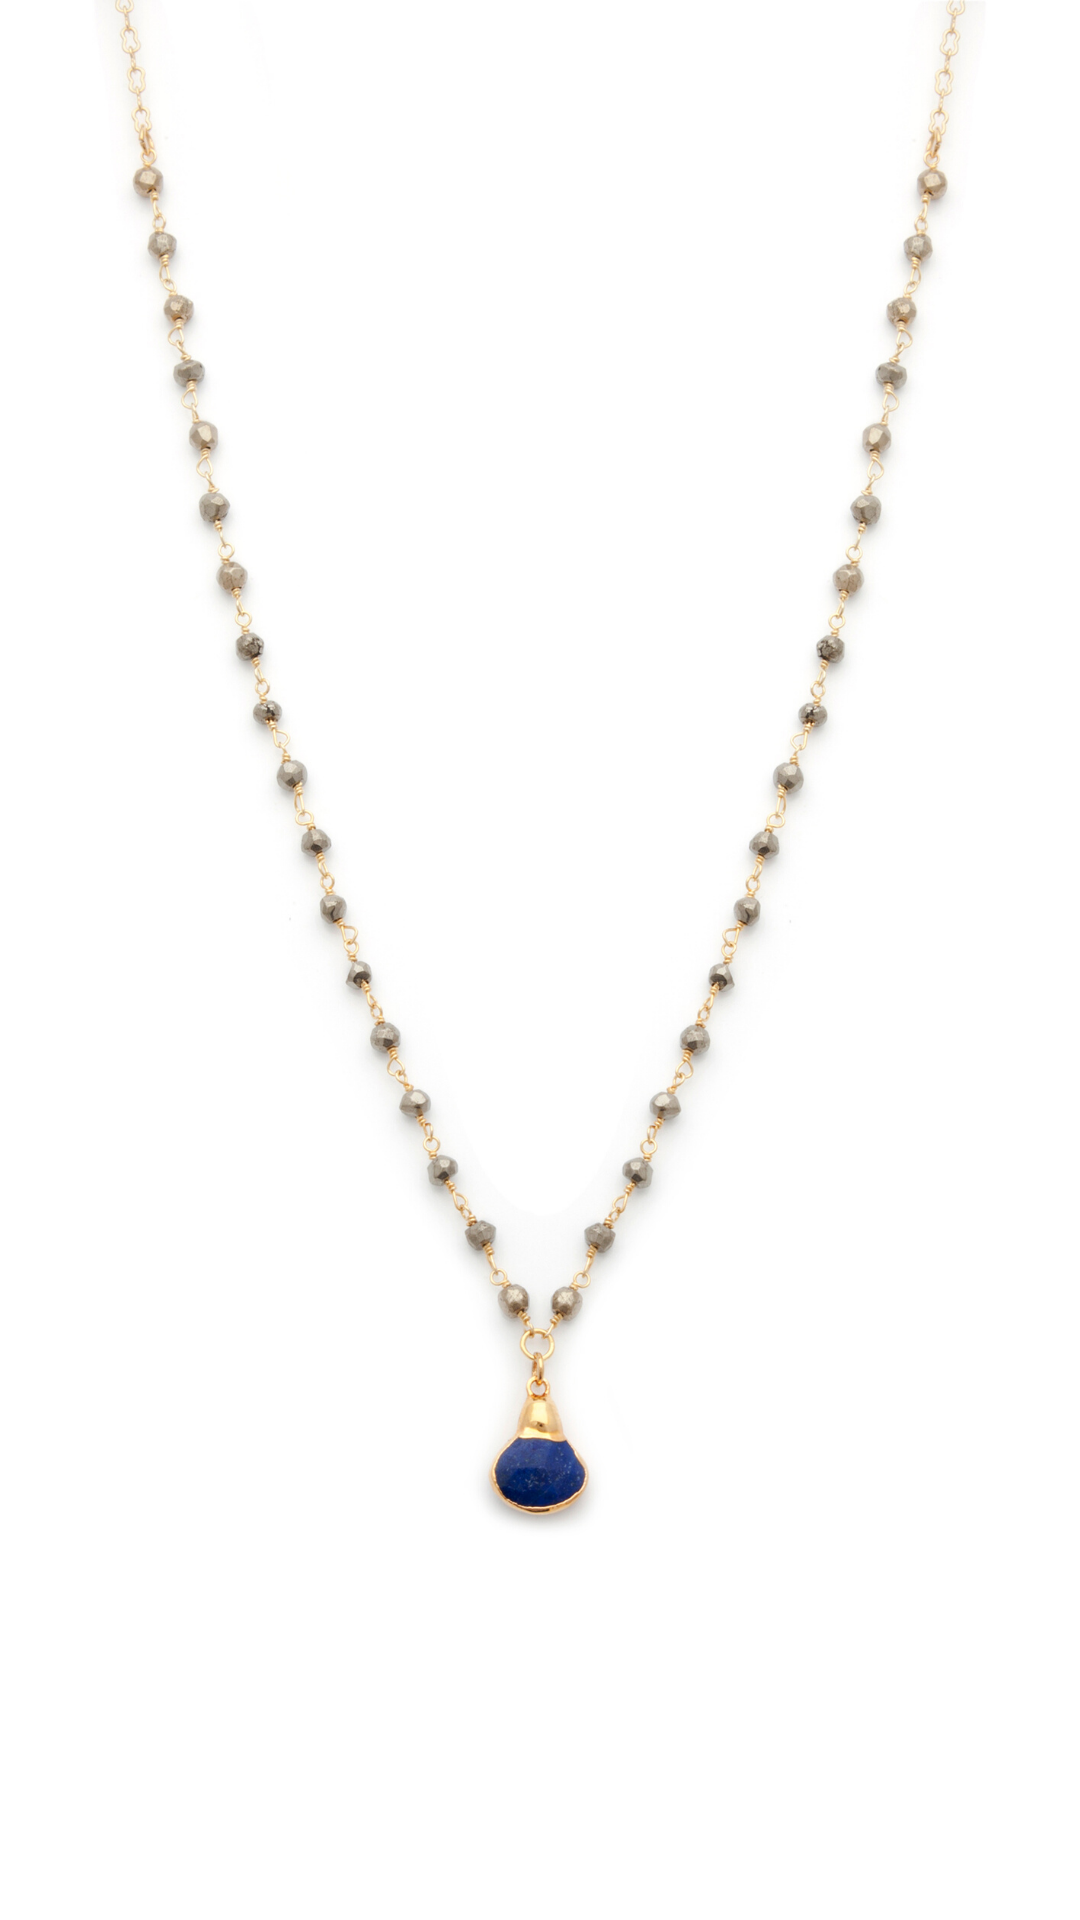 Lapis Lazuli and Pyrite Gold Filled Necklace - Irit Sorokin Designs Jewelry